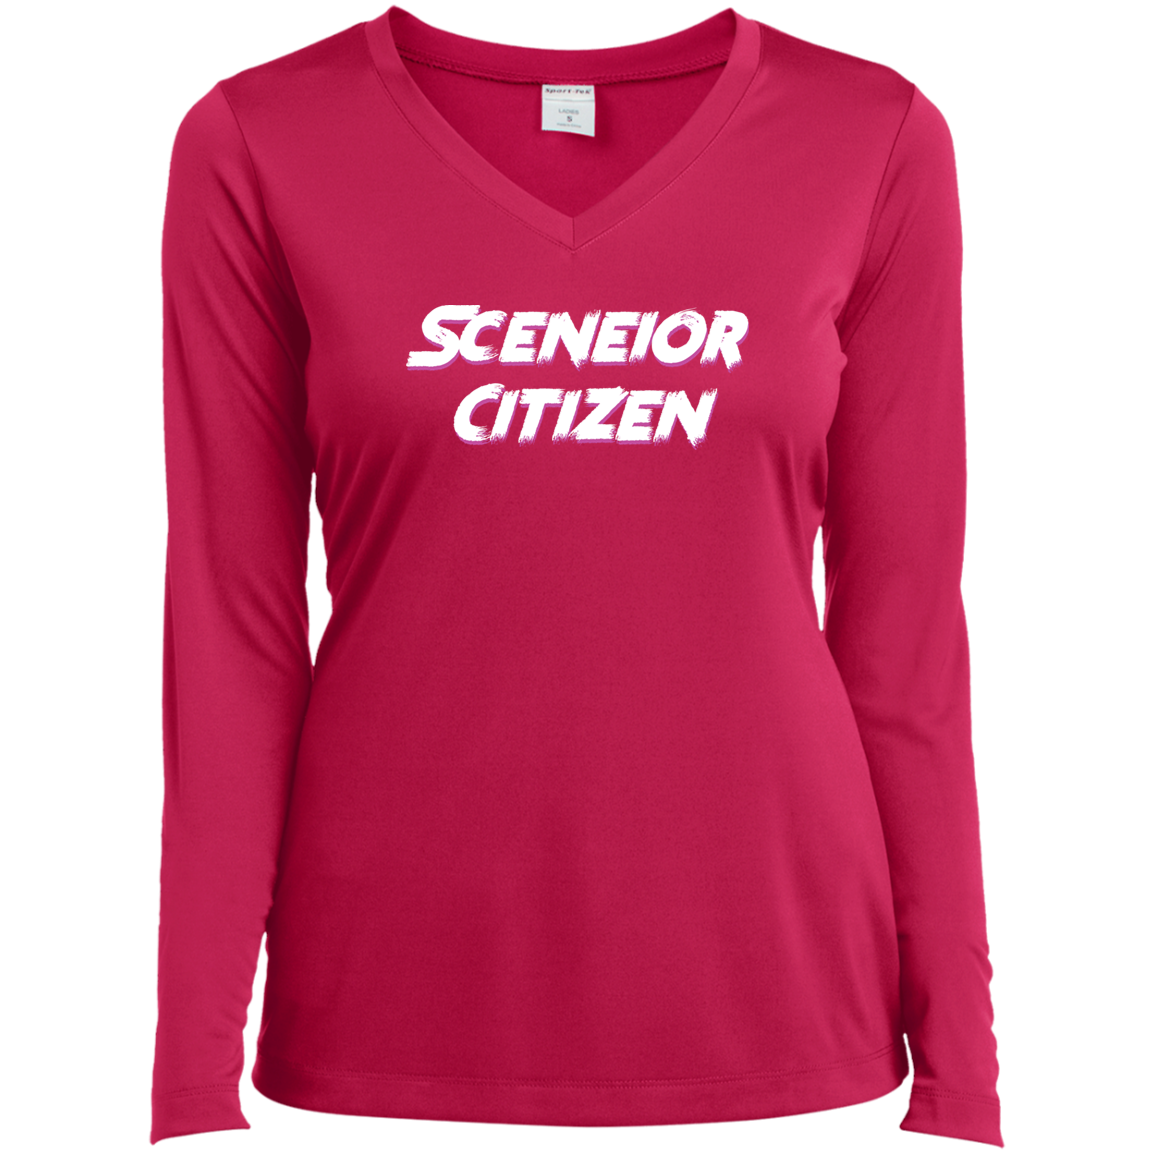 "Sceneior Citizen" Ladies’ Long Sleeve Performance V-Neck Tee